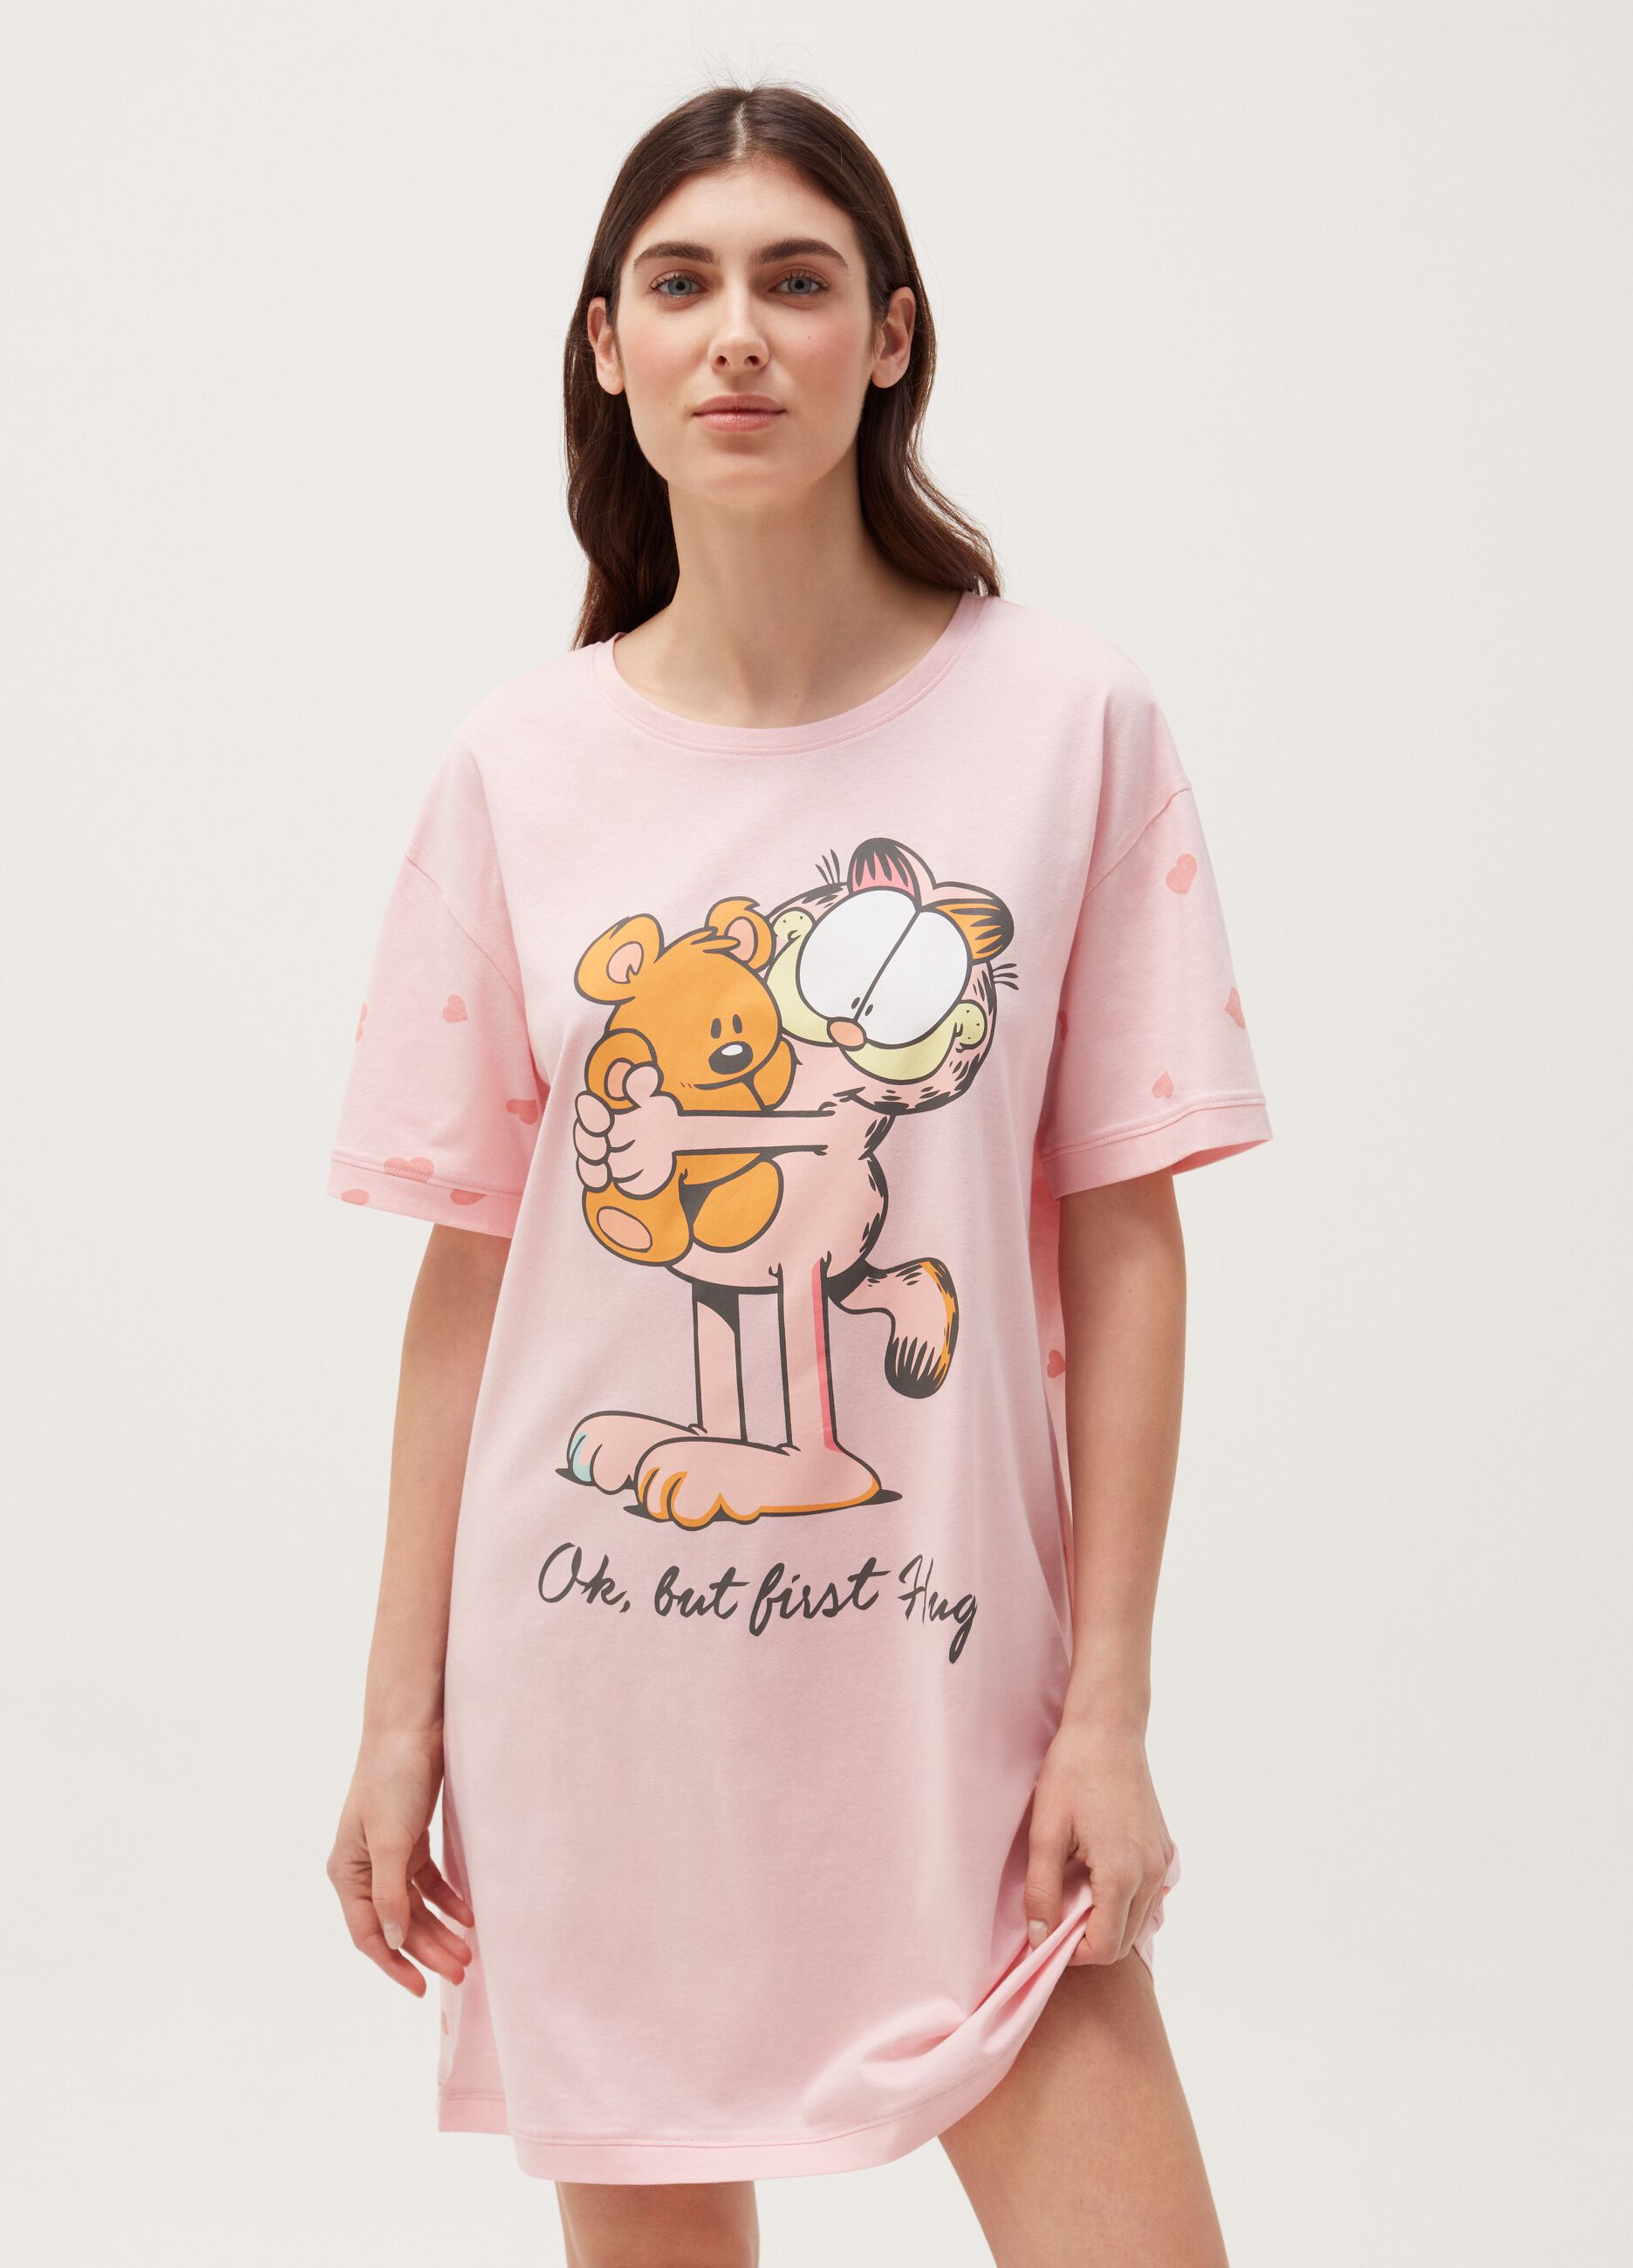 Nightdress with Garfield print